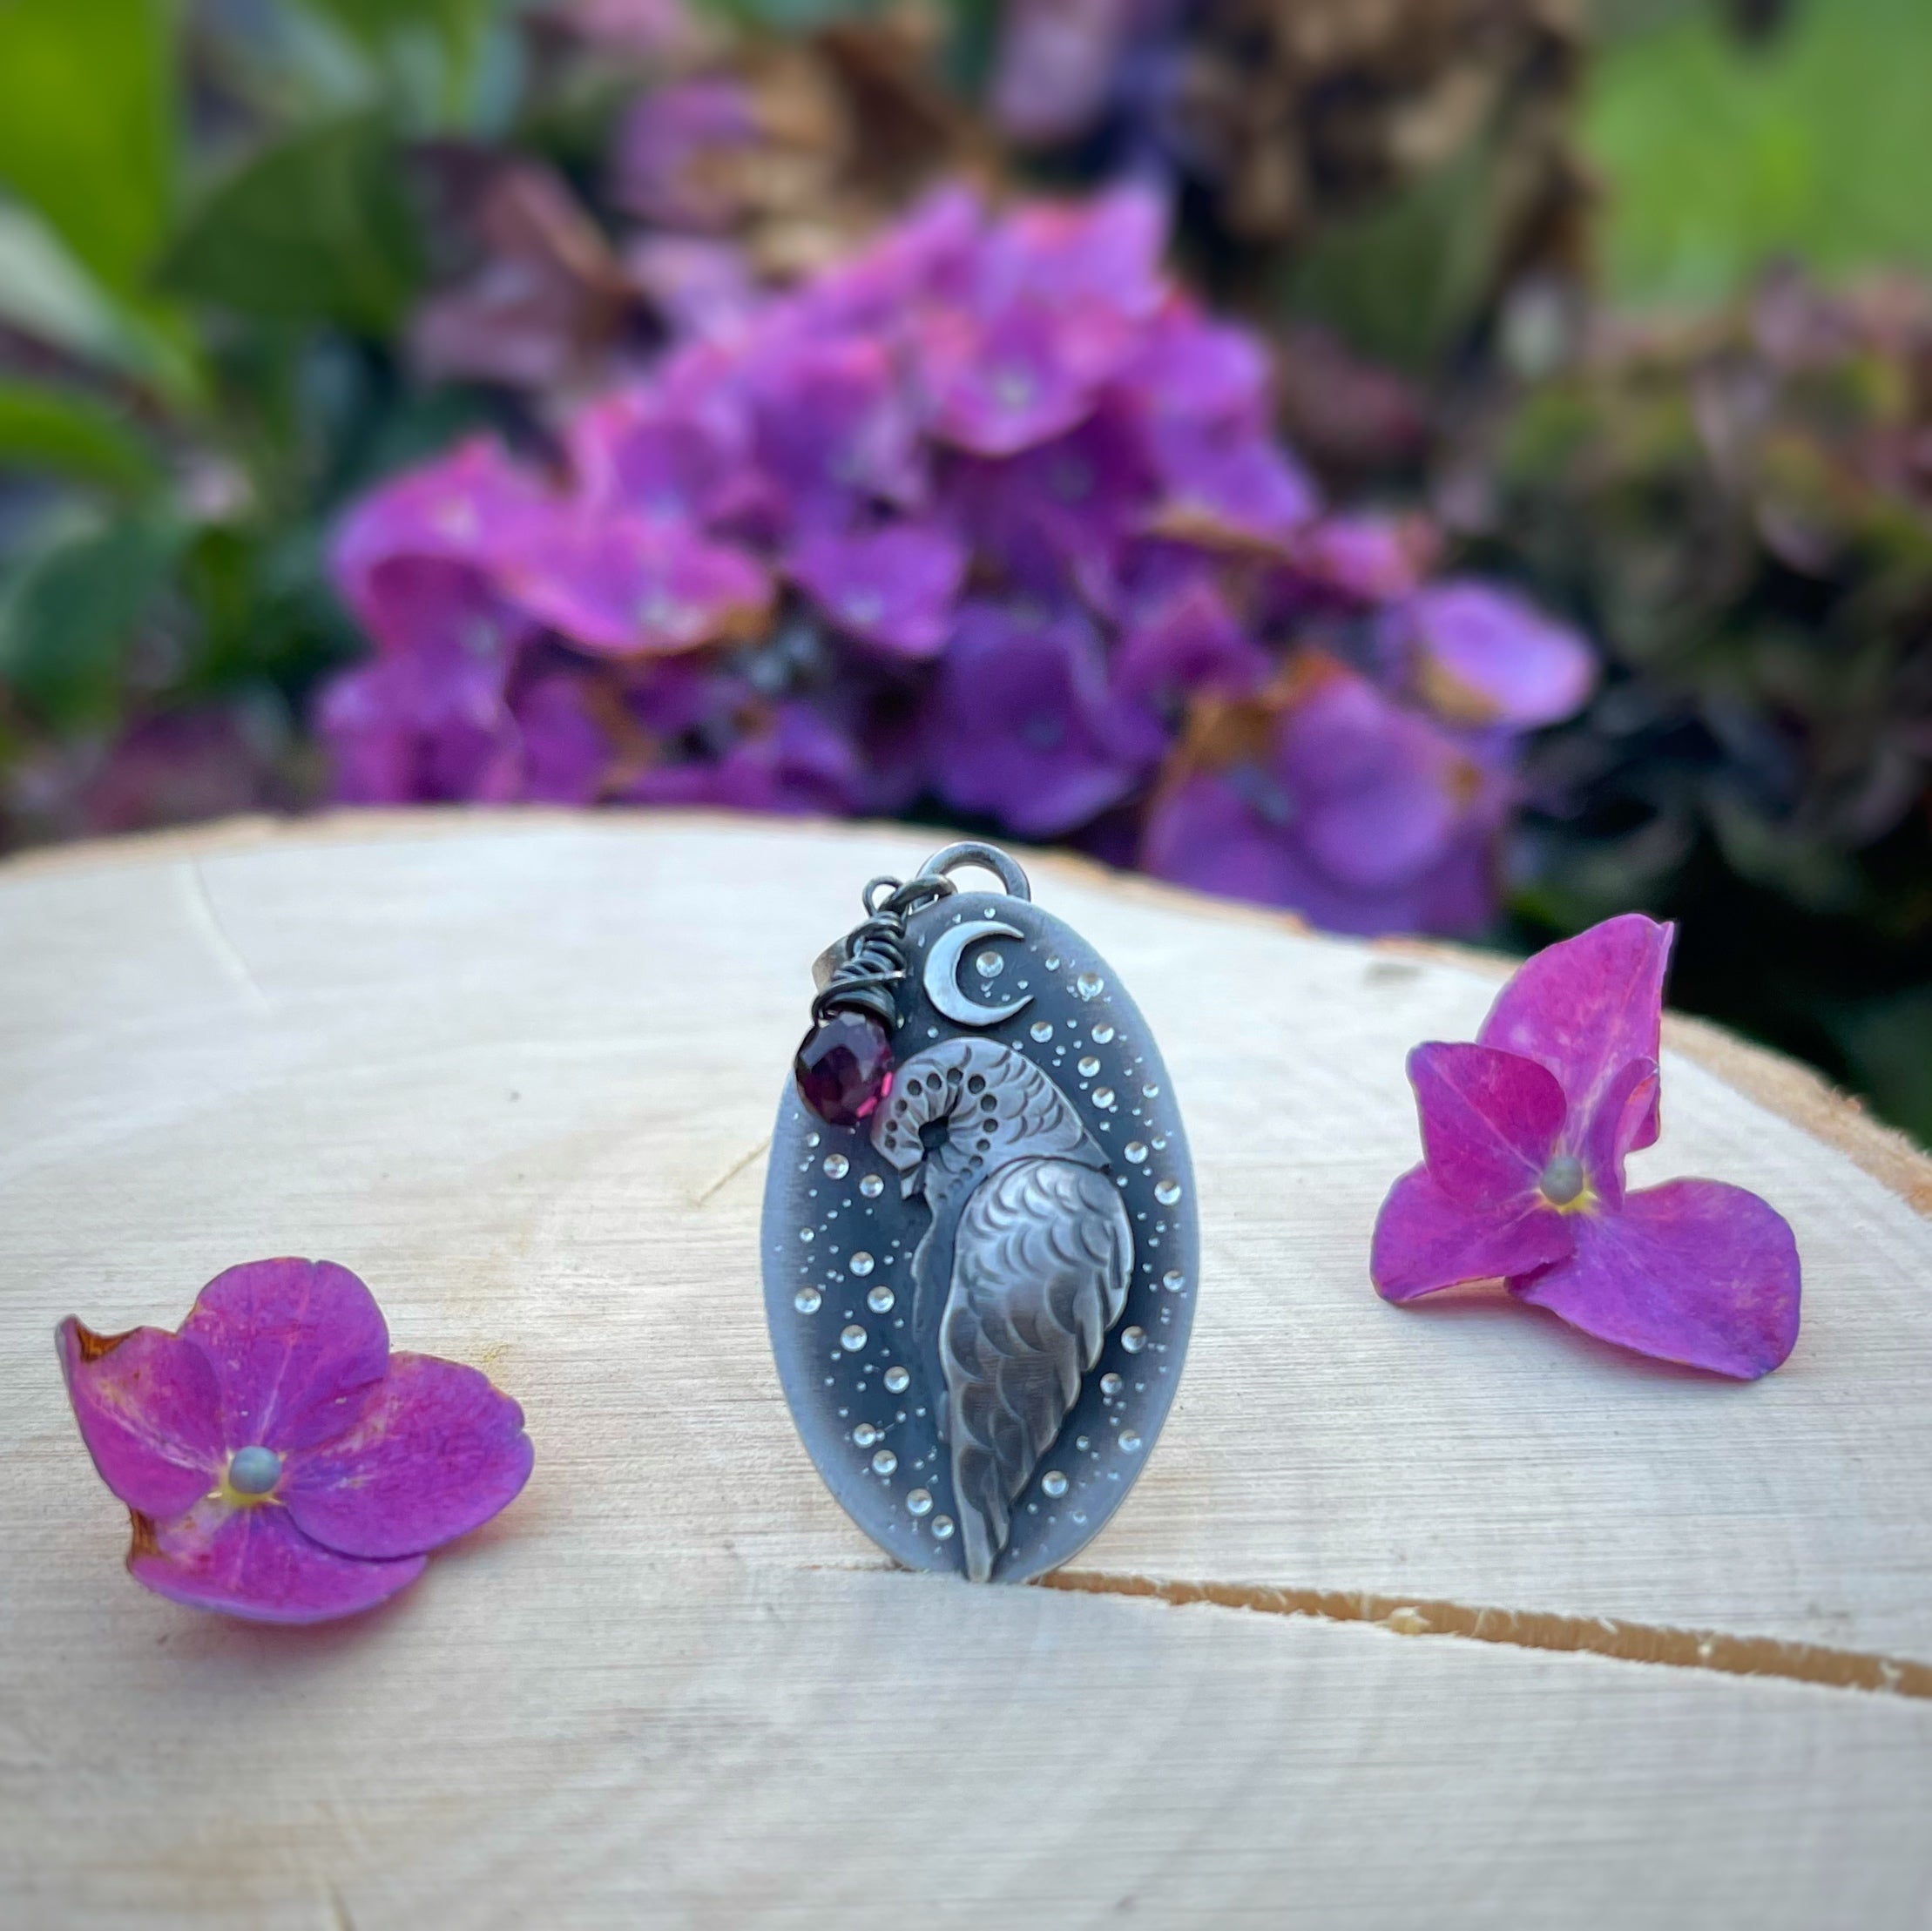 The Barn Owl & Garnet Necklace